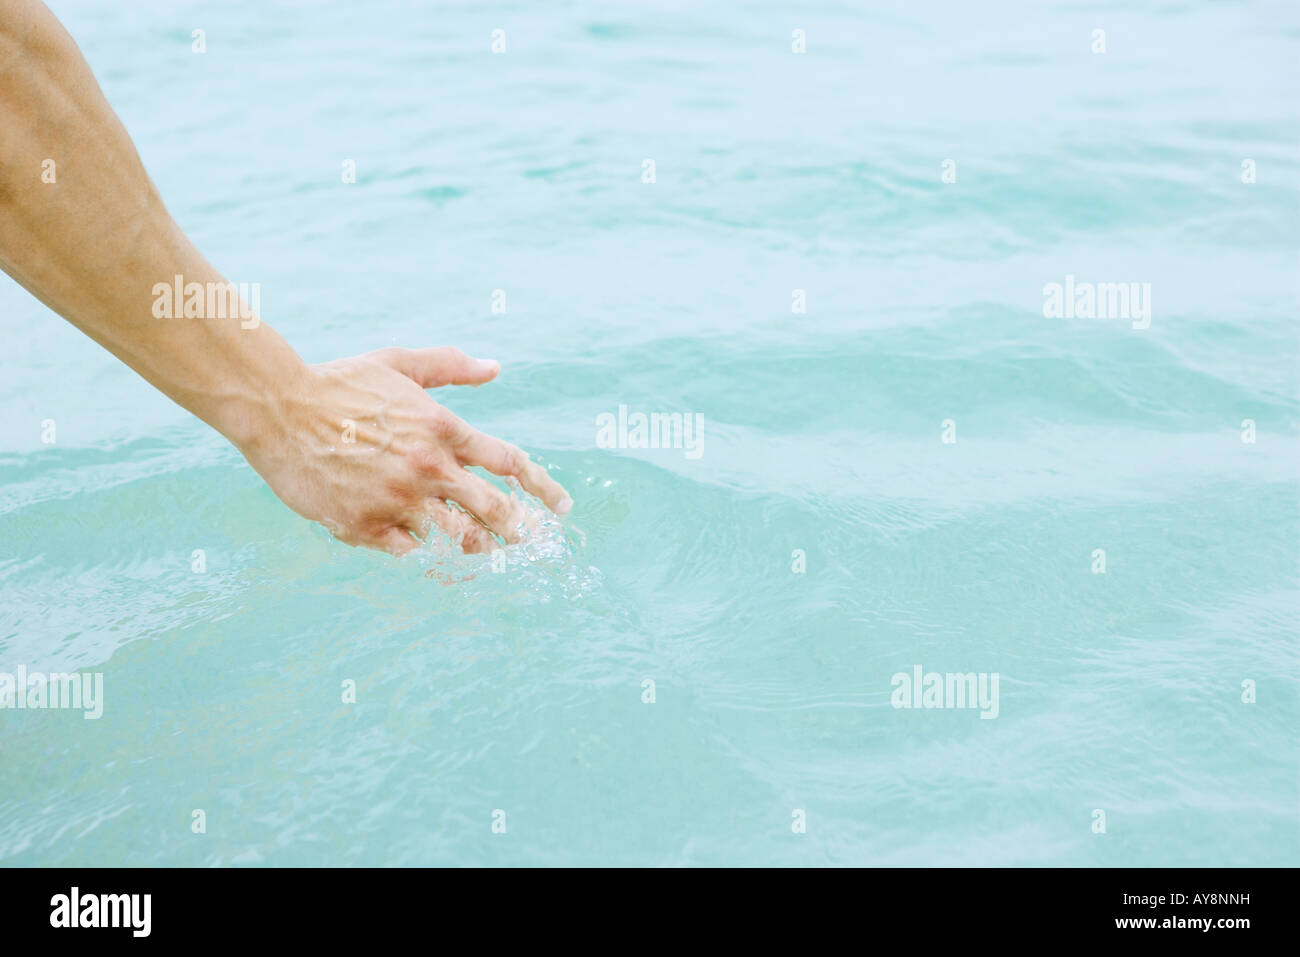 Hand touching water, close-up Stock Photo